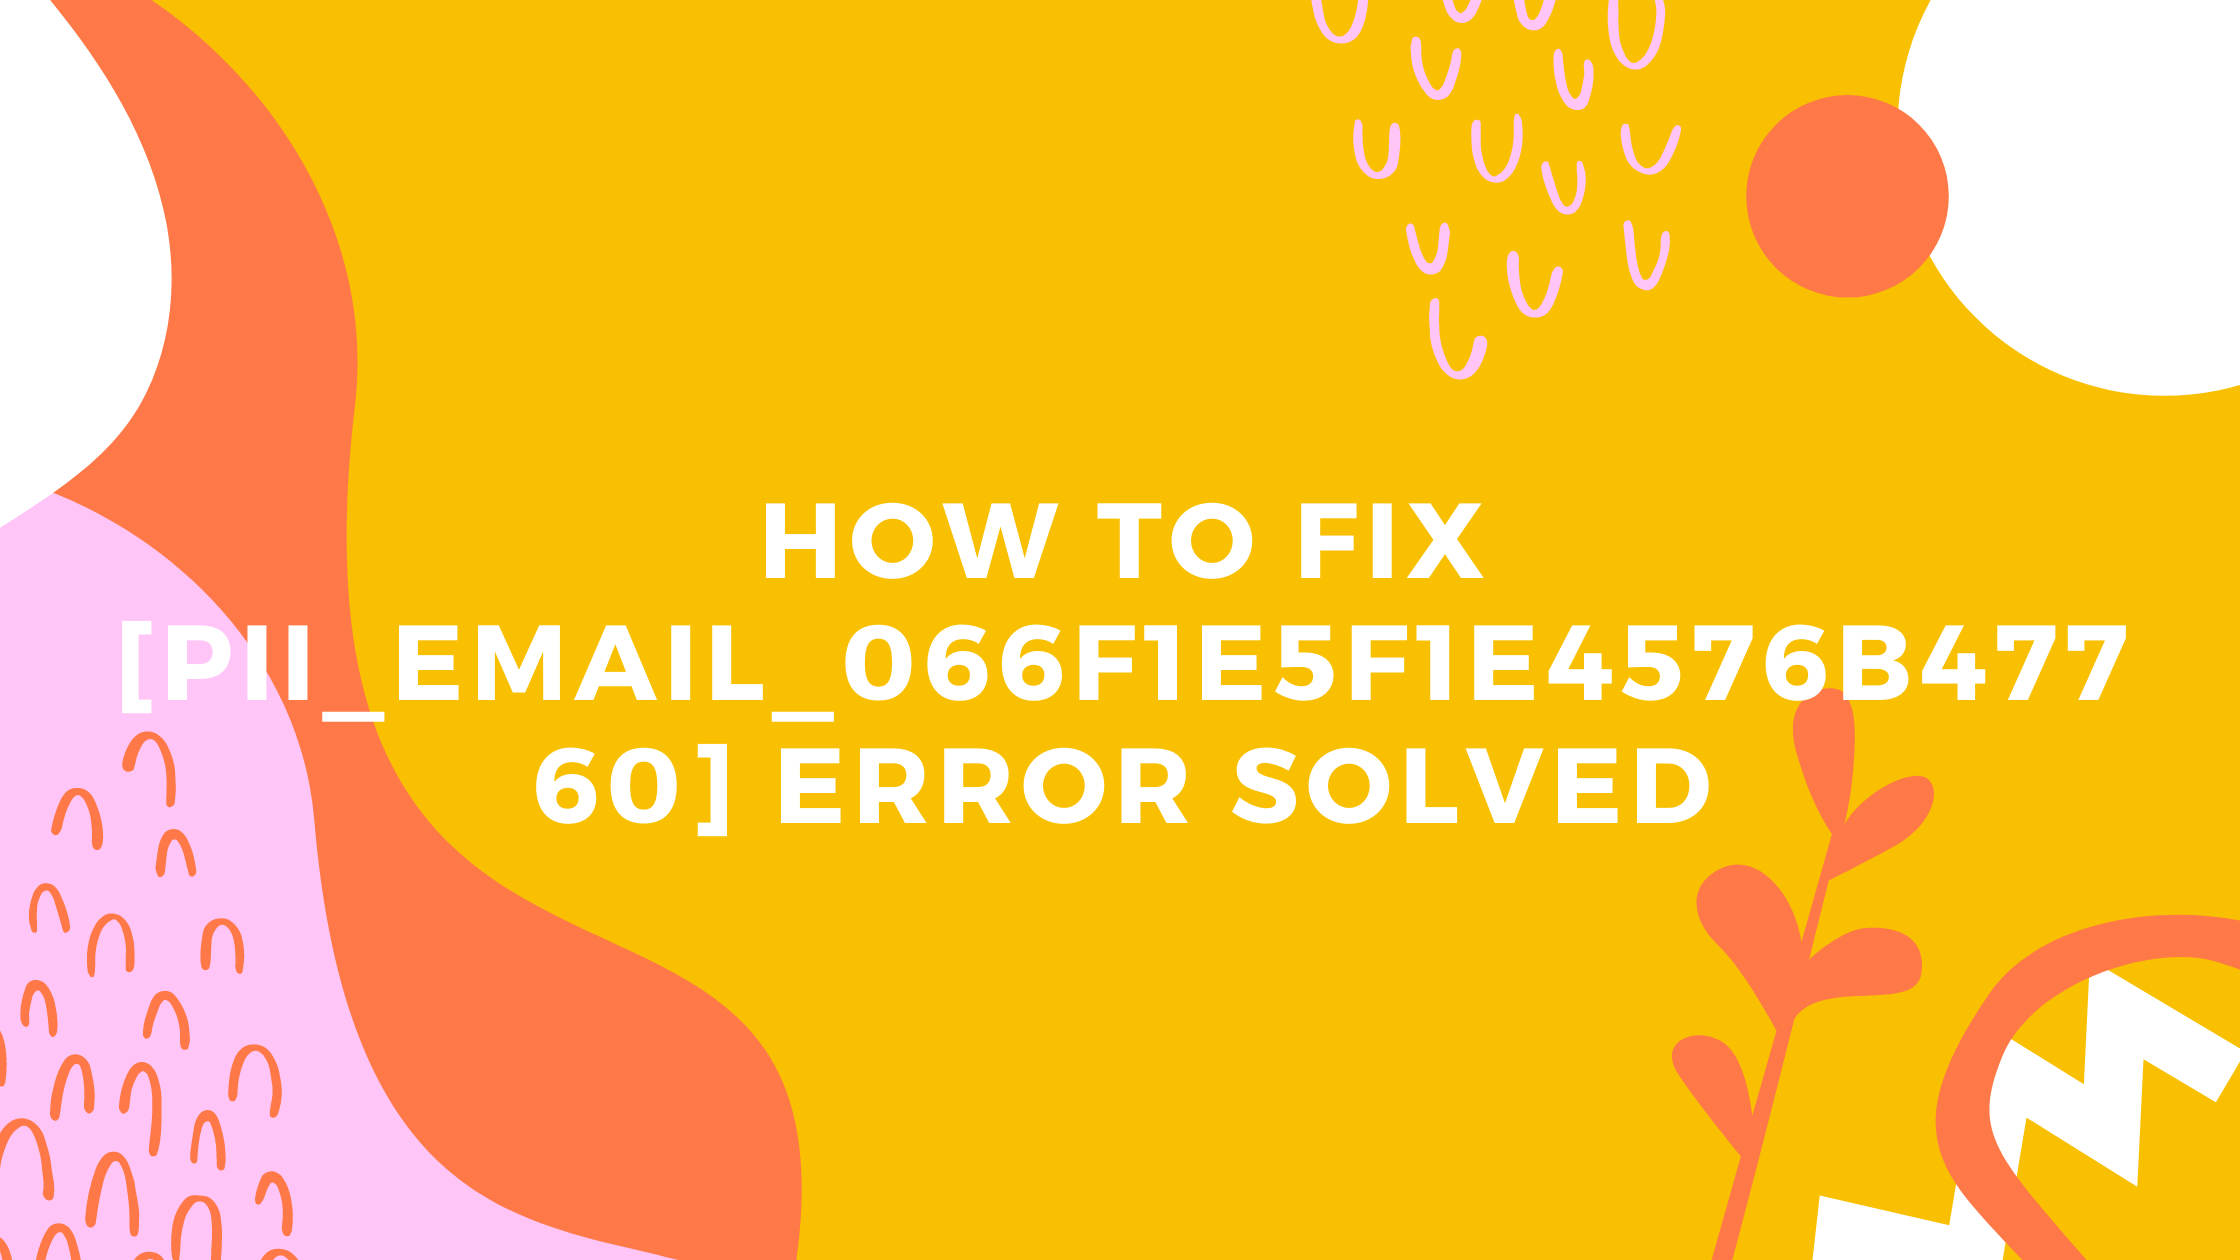 How Can I Fix The Error [Pii_email_066f1e5f1e4576b477